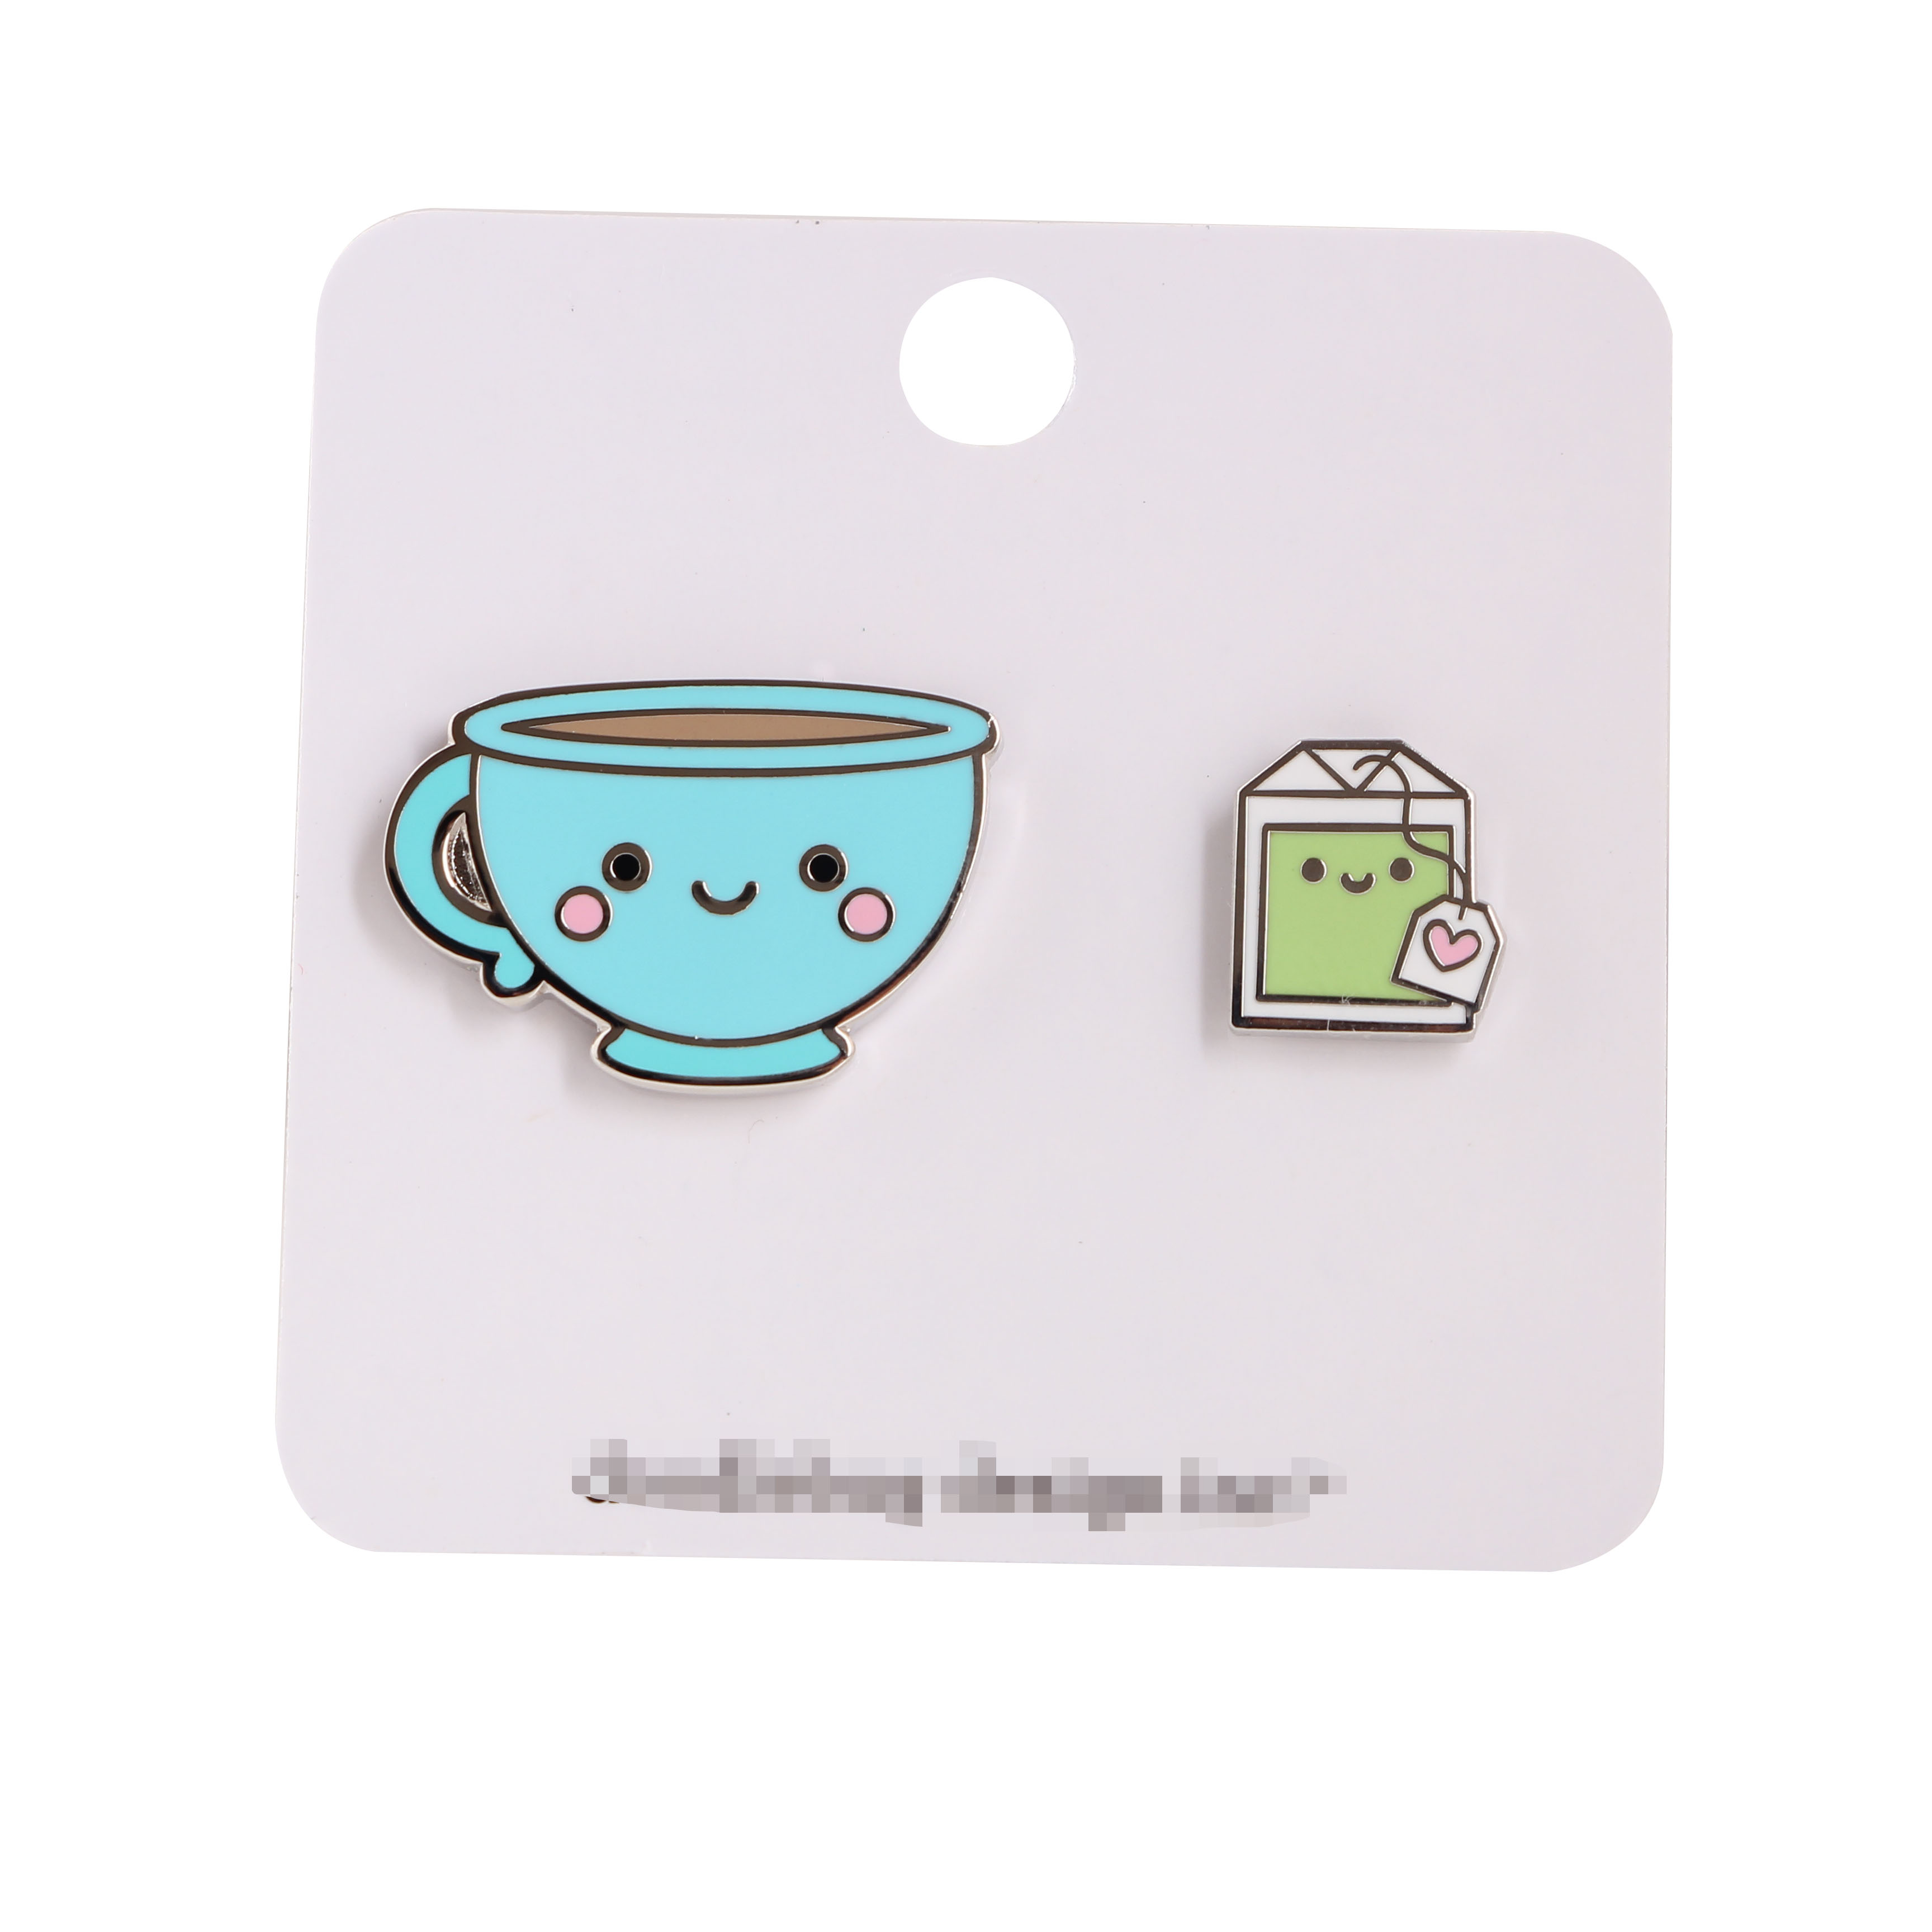 Cute milk coffee hard enamel pin with backing card